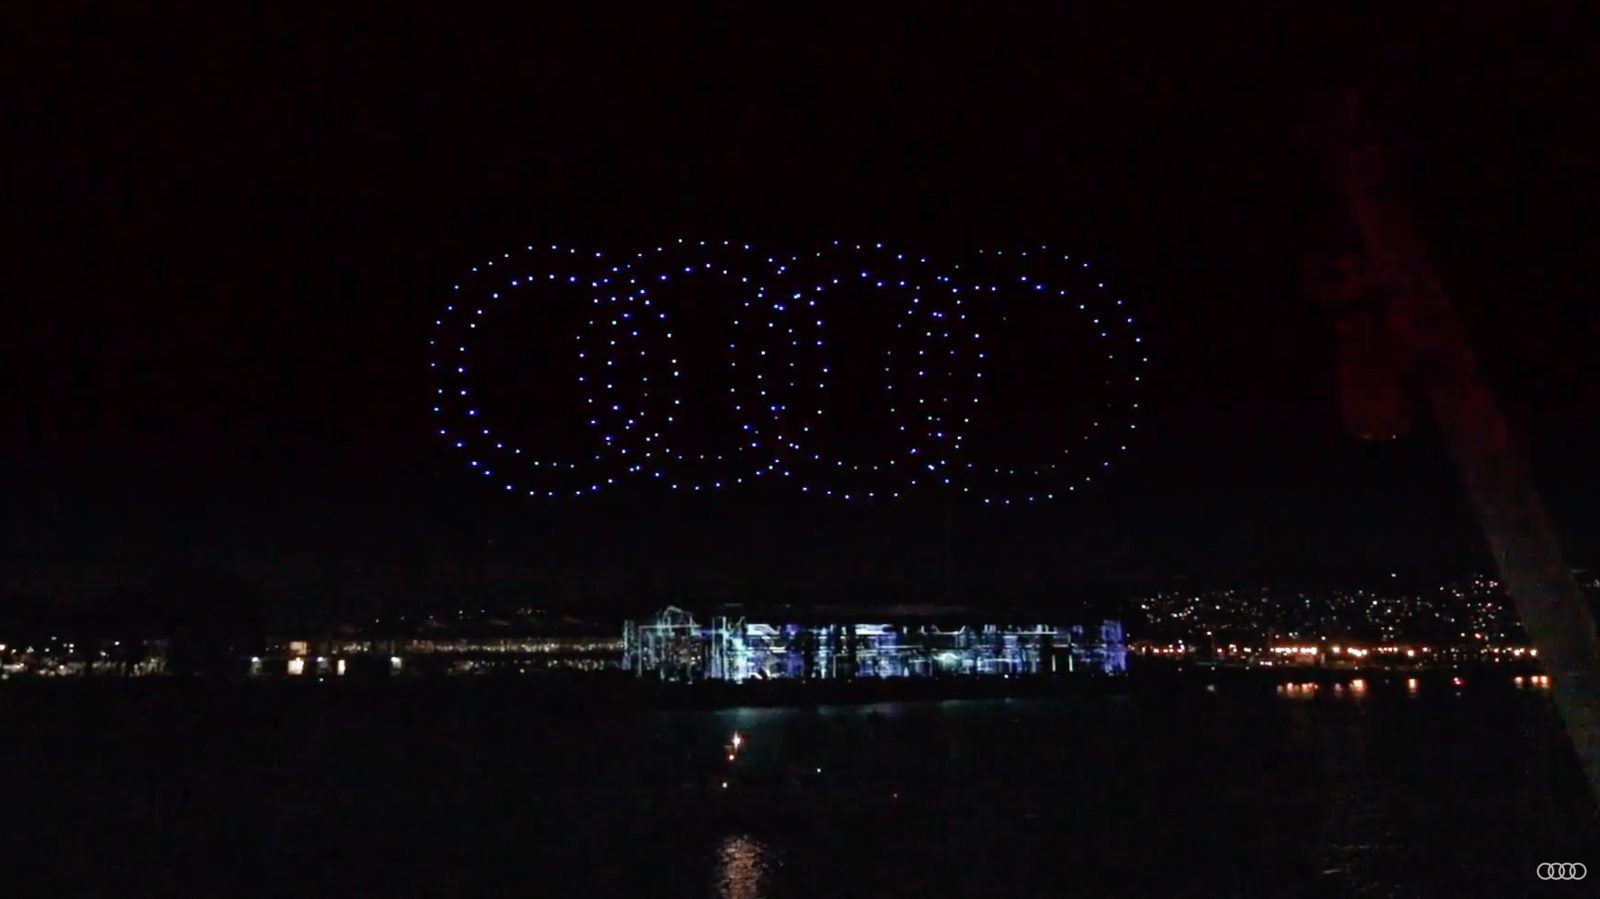 Audi kicks off launch e-tron model with a drone light show